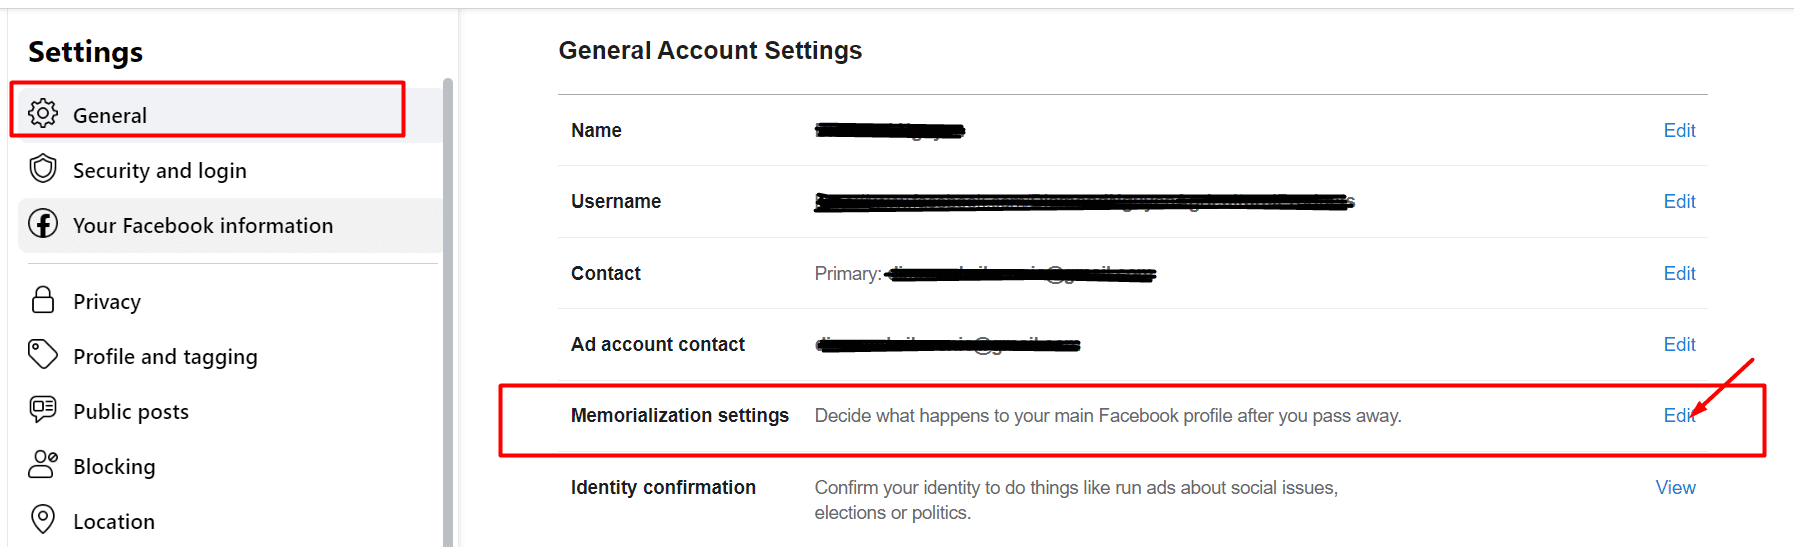 facebook account generator - Memorialization settings